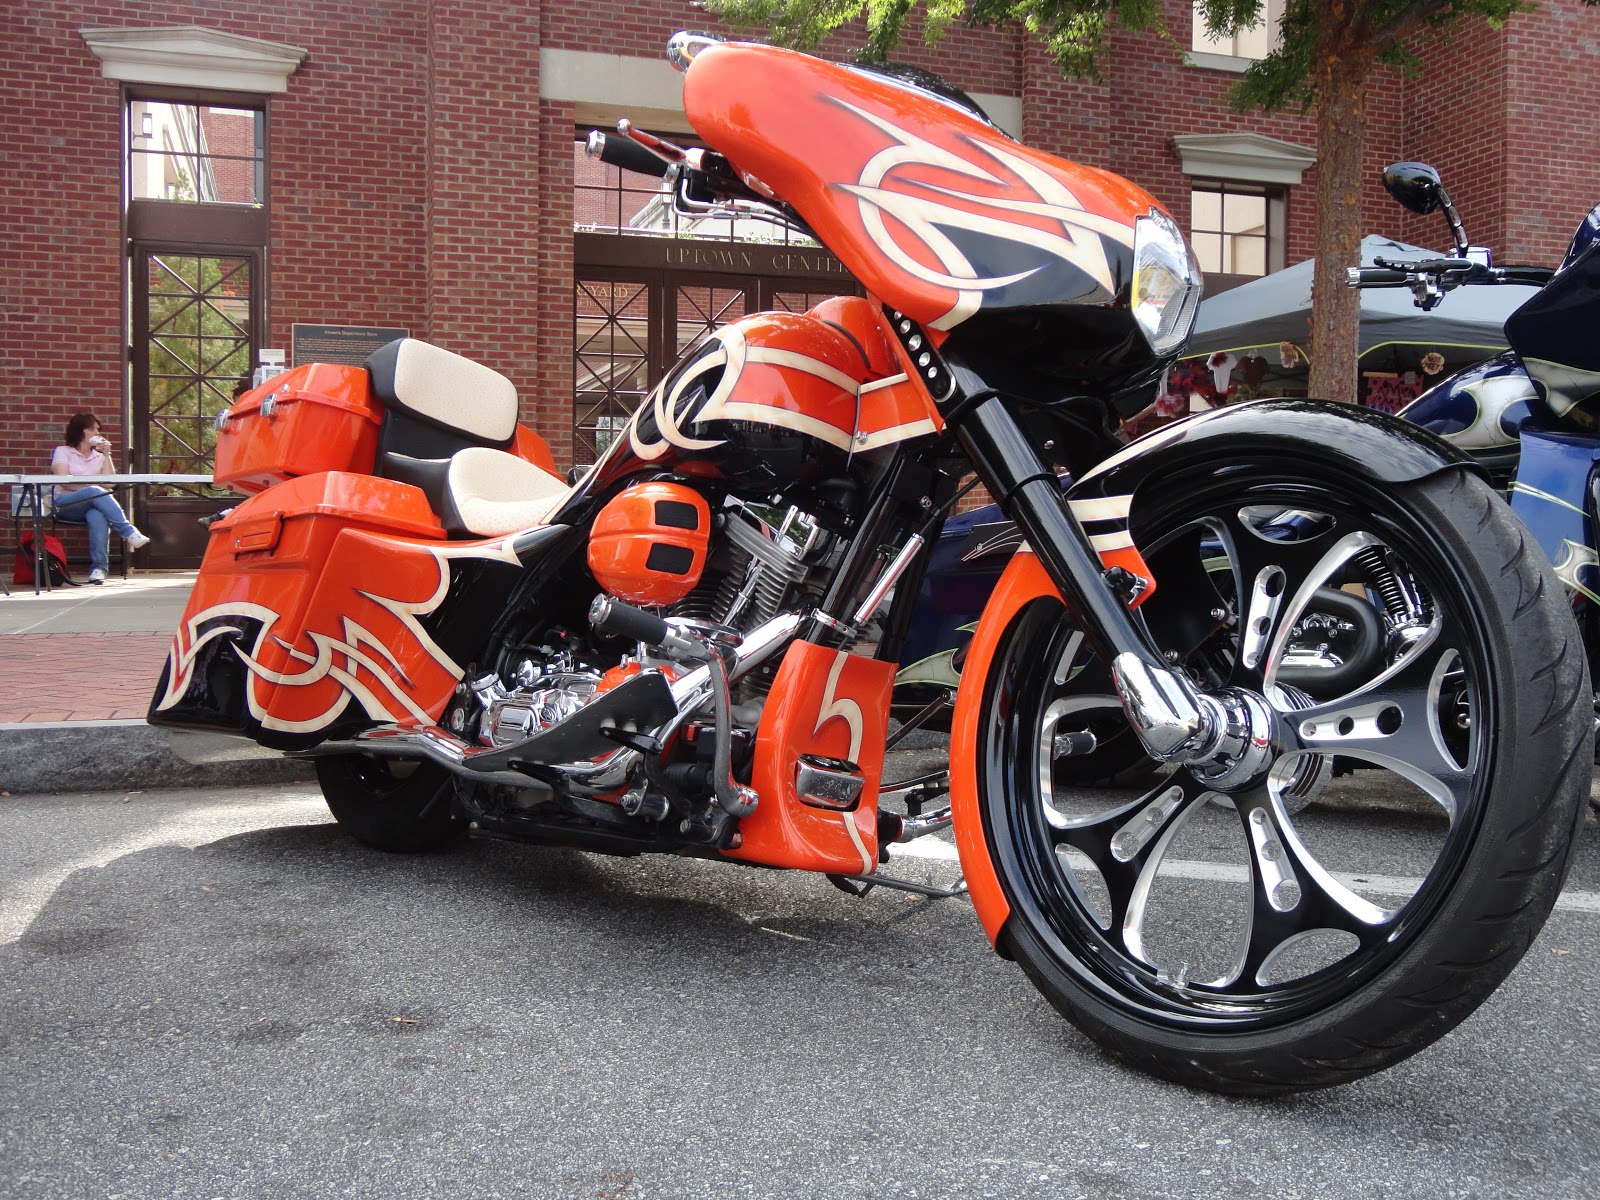  Harley Davidson Careers 